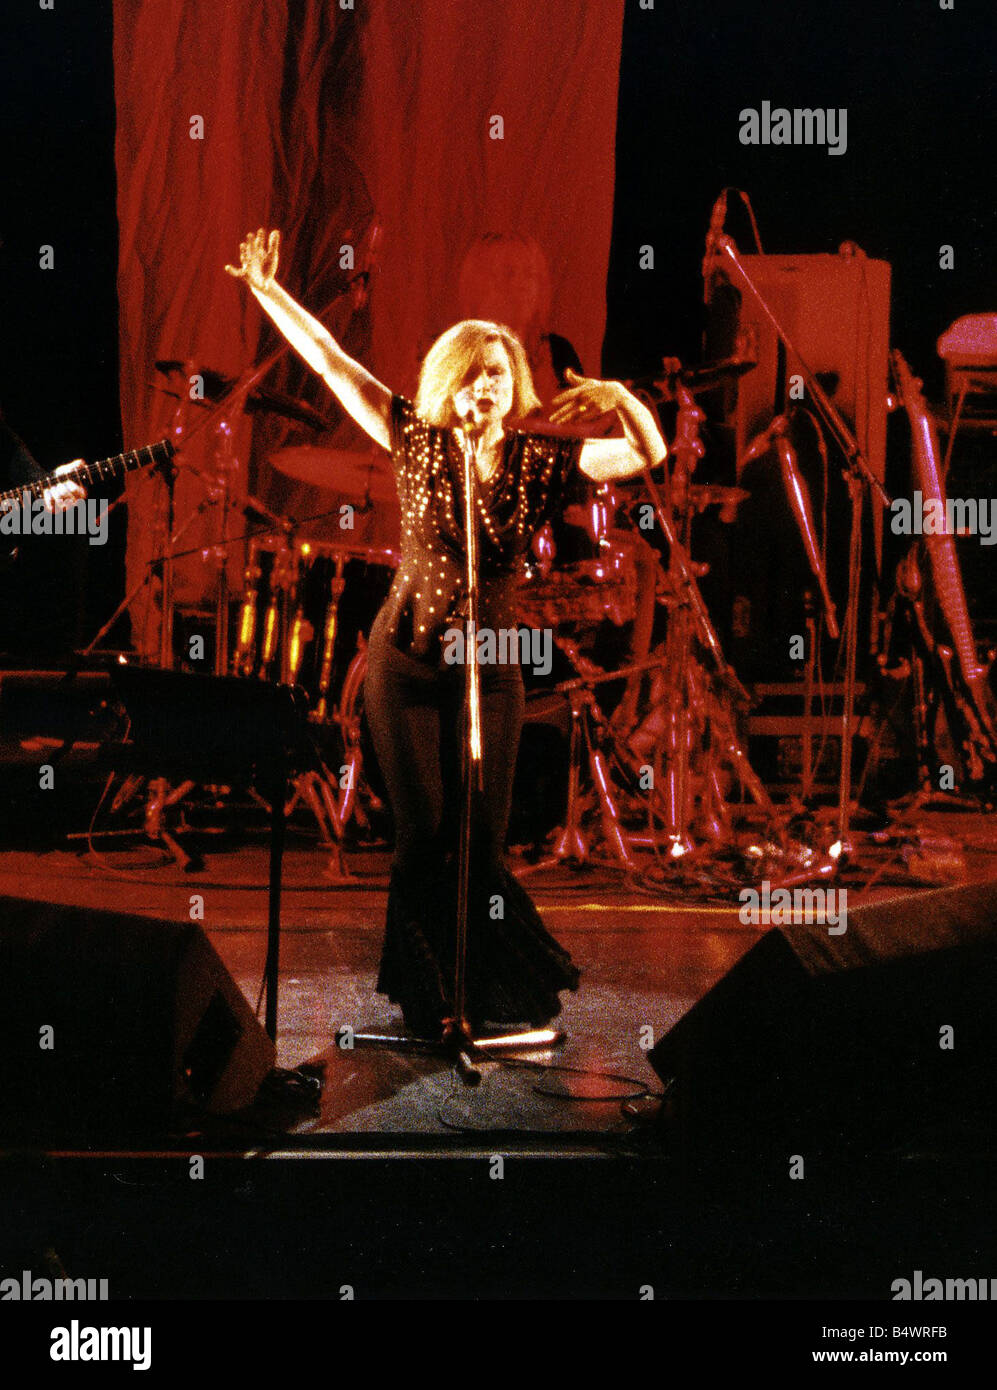 Debbie Harry Singer and leader of pop group Blondie performing on stage Stock Photo